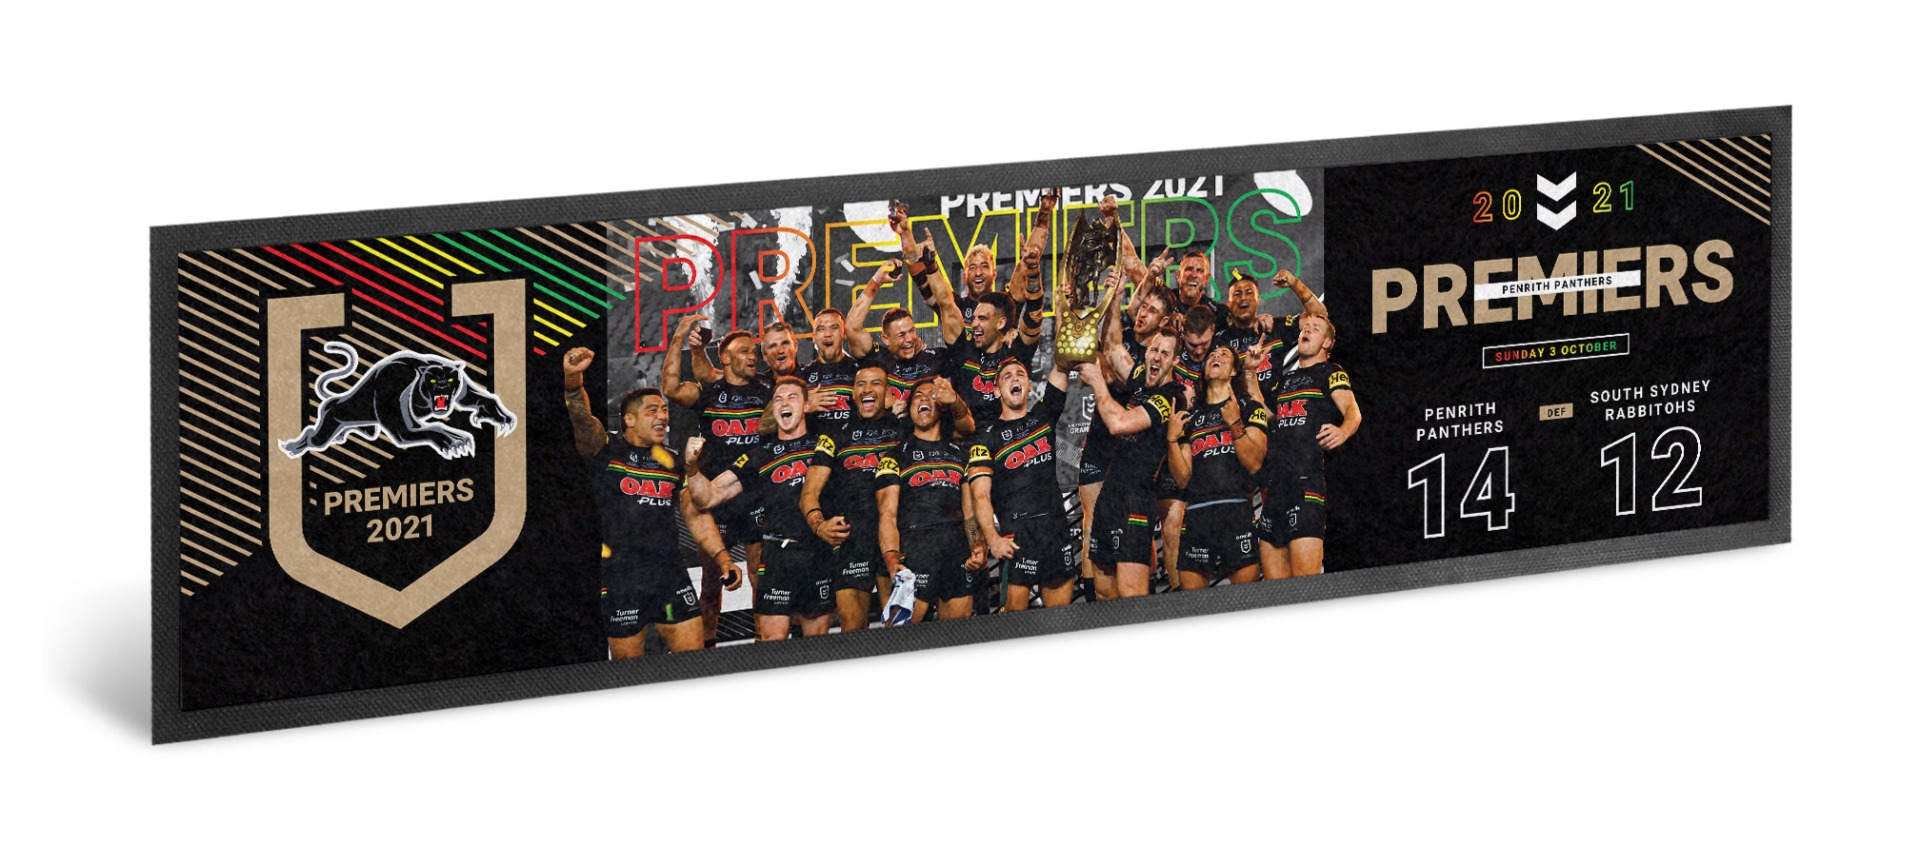 PRE ORDER - Penrith Panthers 2021 NRL Premiers Team Image Rubber Back Bar Runner Mat